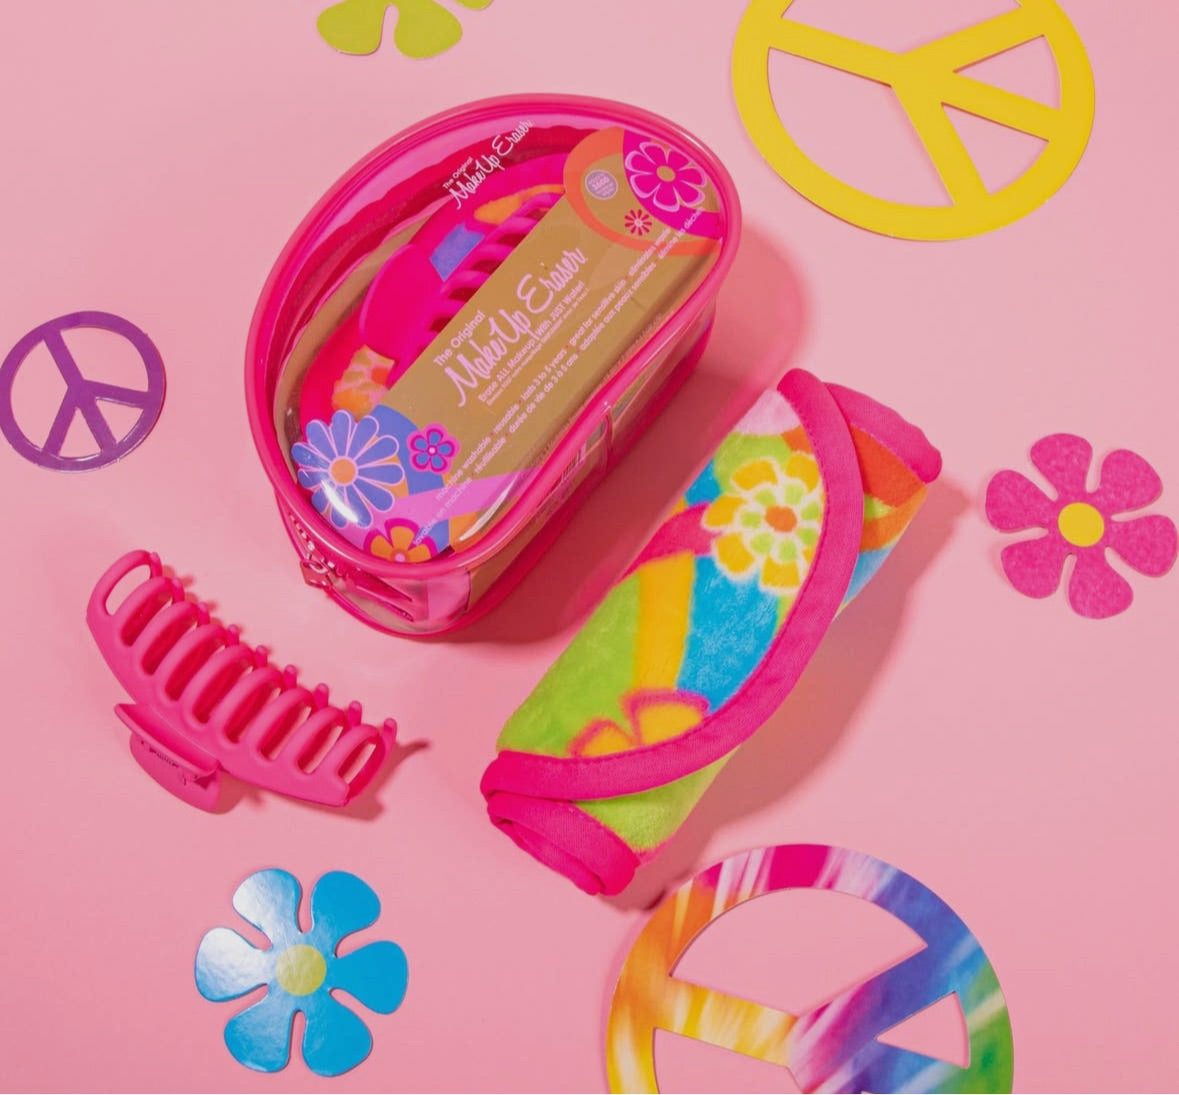 Flowerbomb Makeup Eraser Set